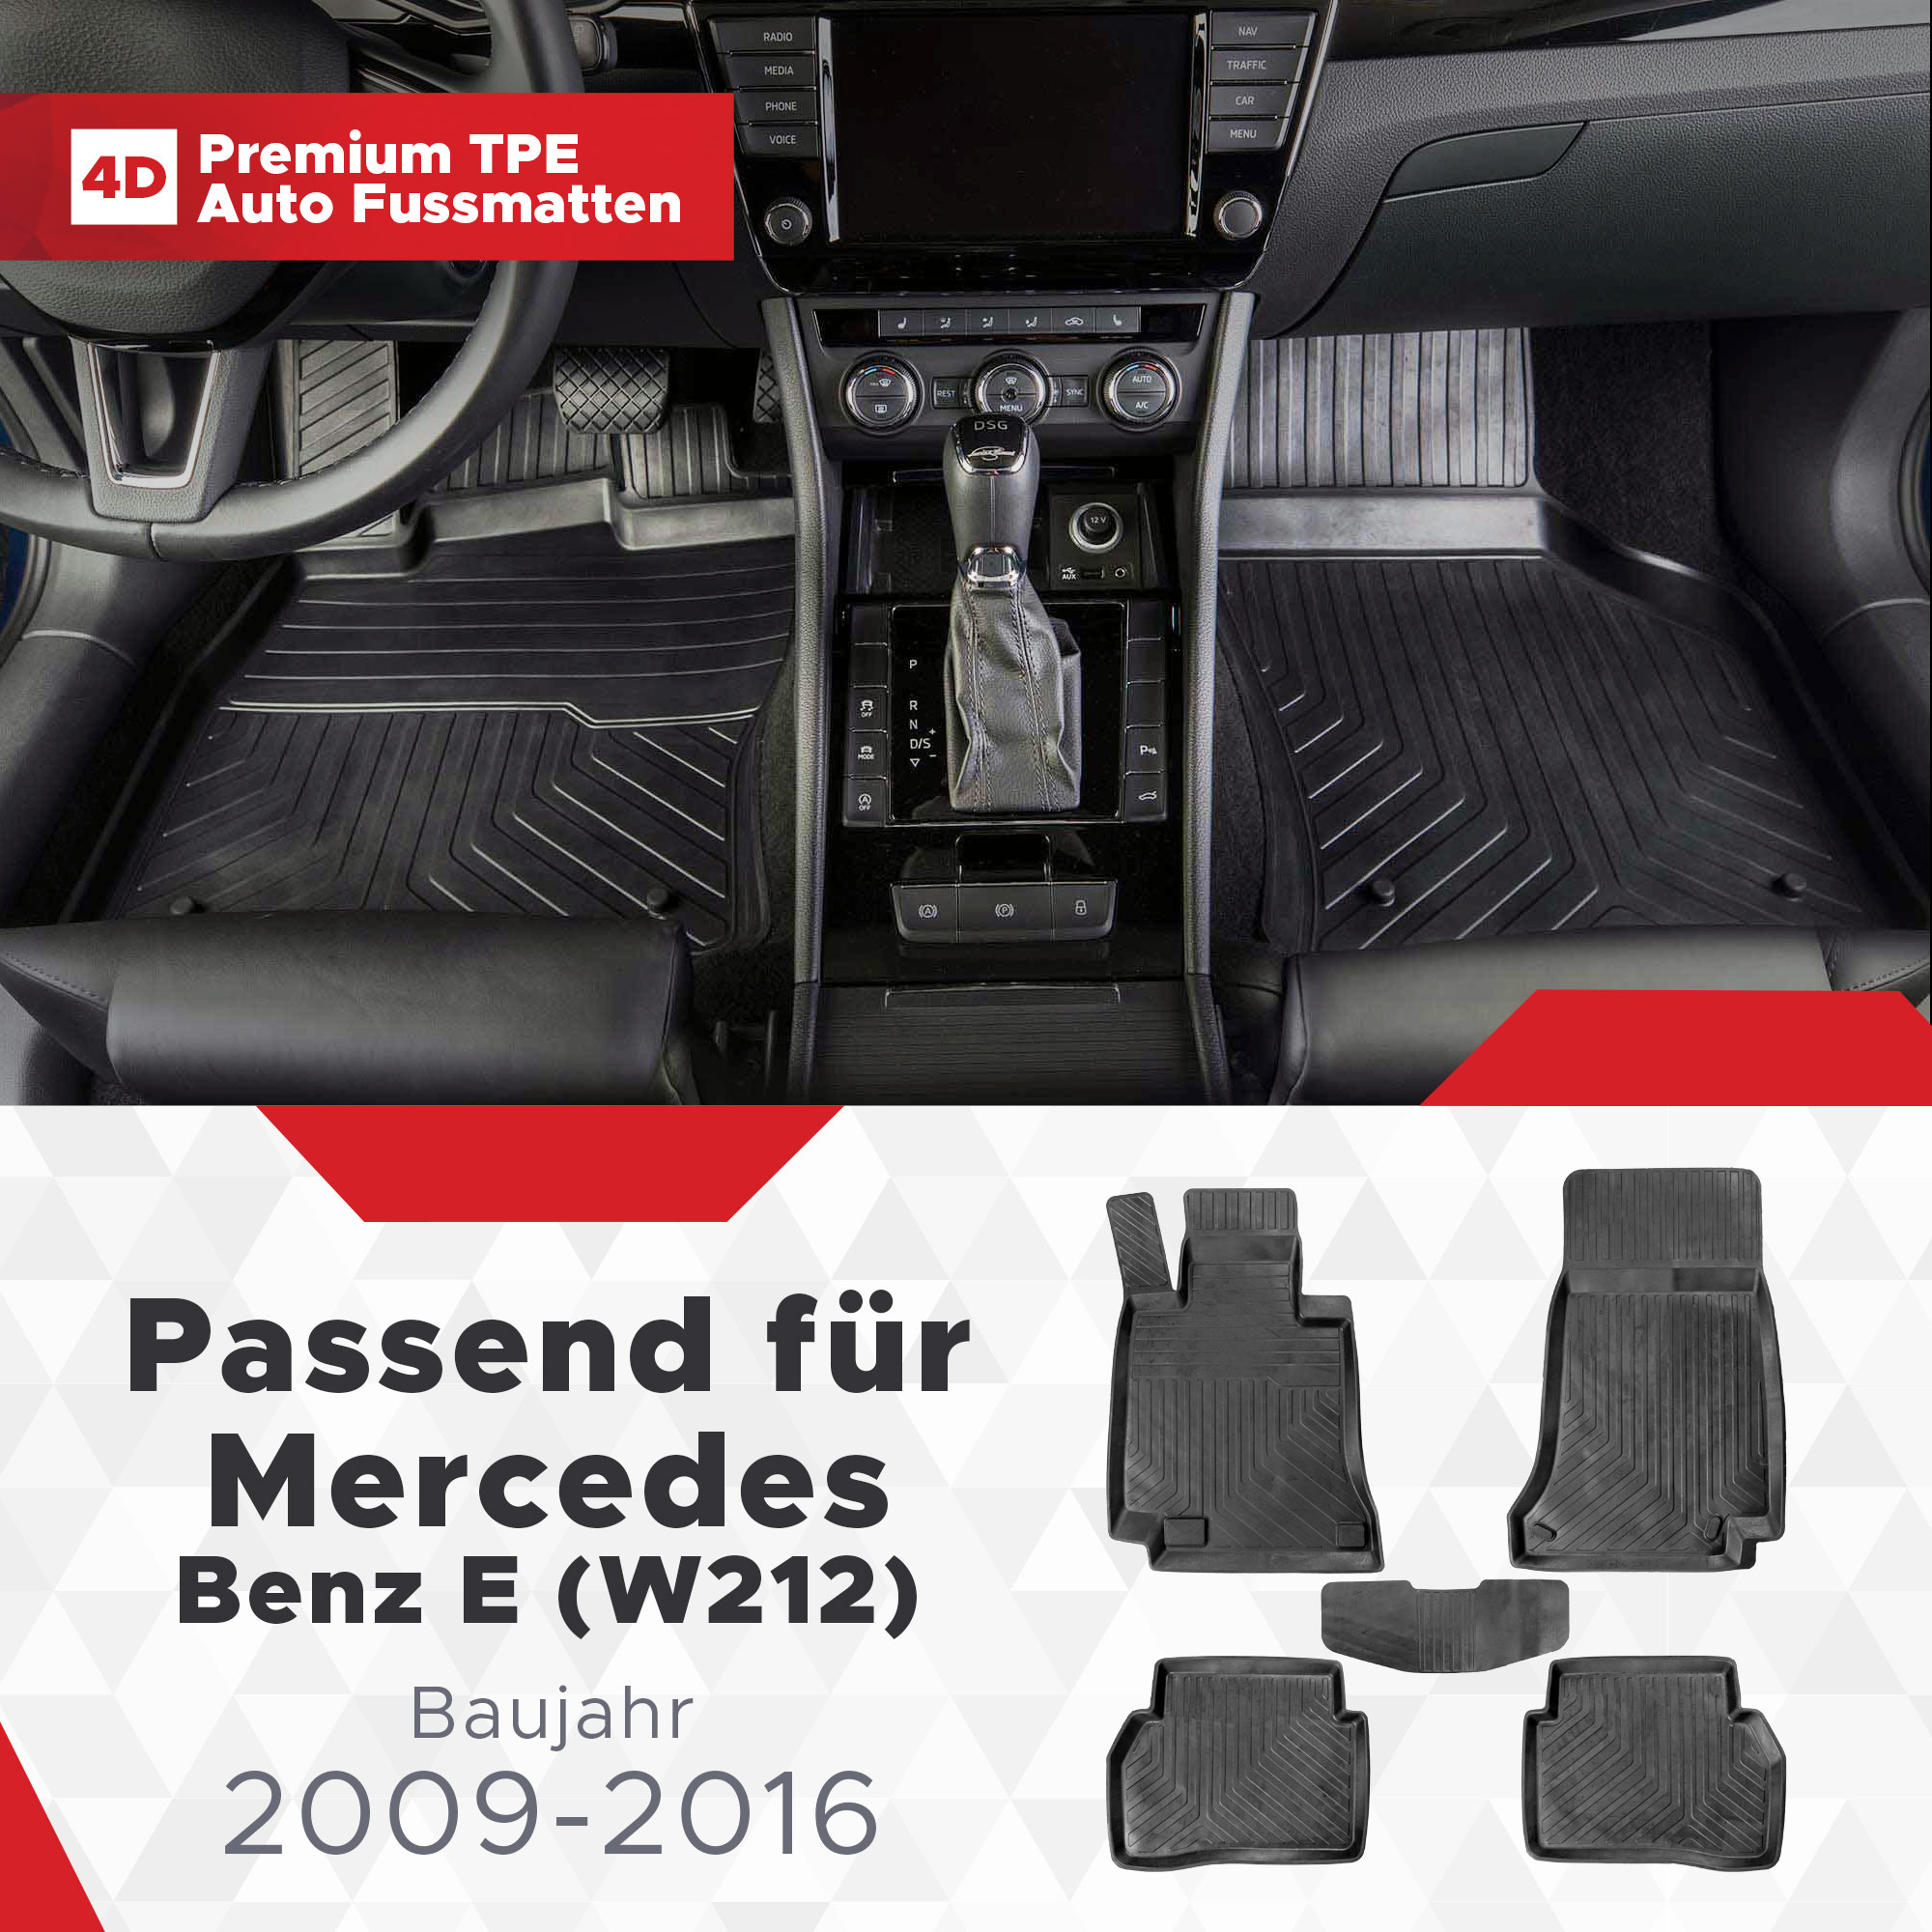 4D Mercedes Benz E Klasse (W212) Fussmatten Bj 2009-2016 Gummimatten